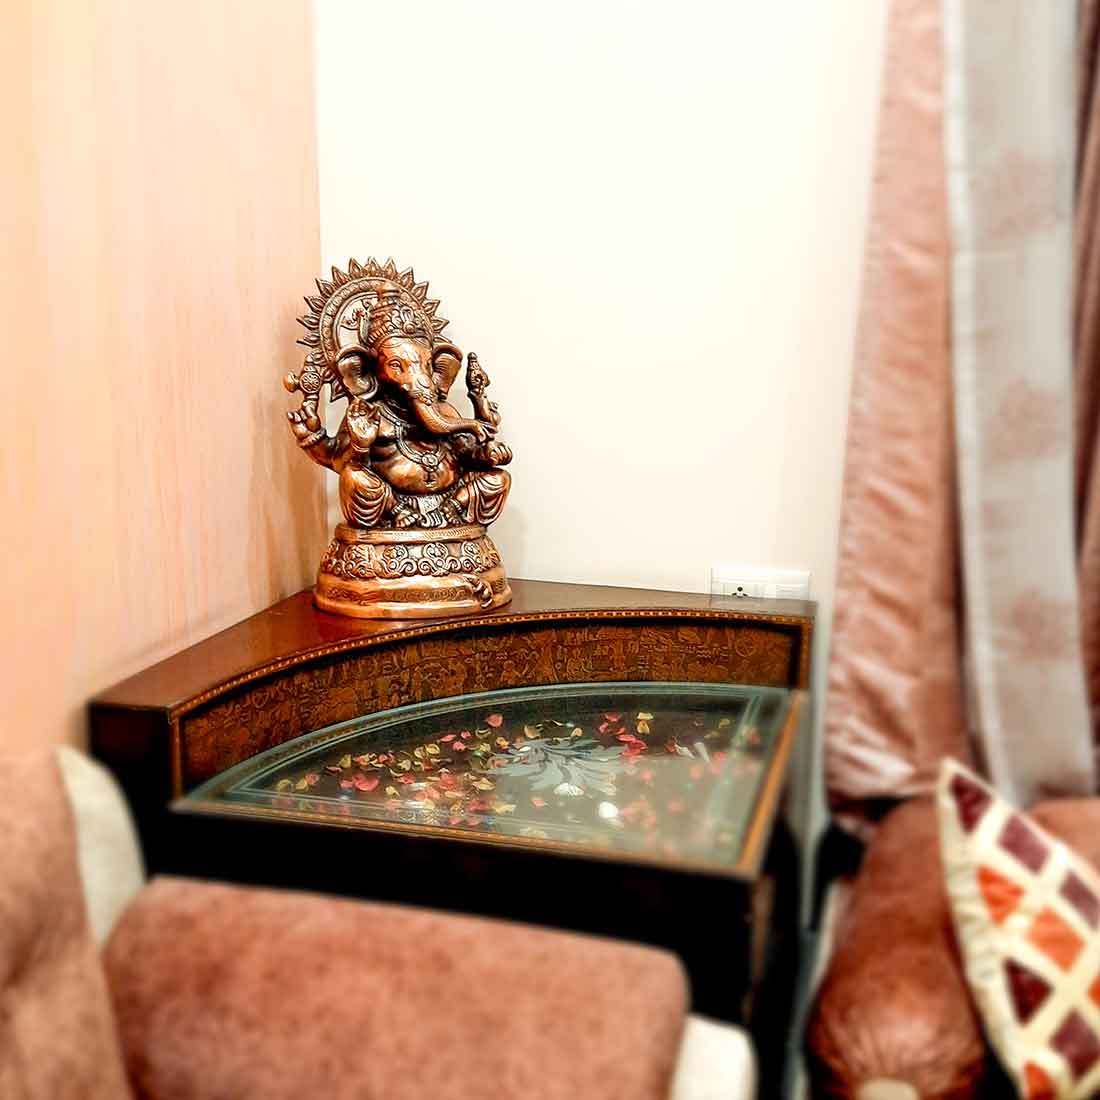 Ganpati Idol | Ganesha Statue - for Pooja, Home and Gifting - 21 Inch- Apkamart